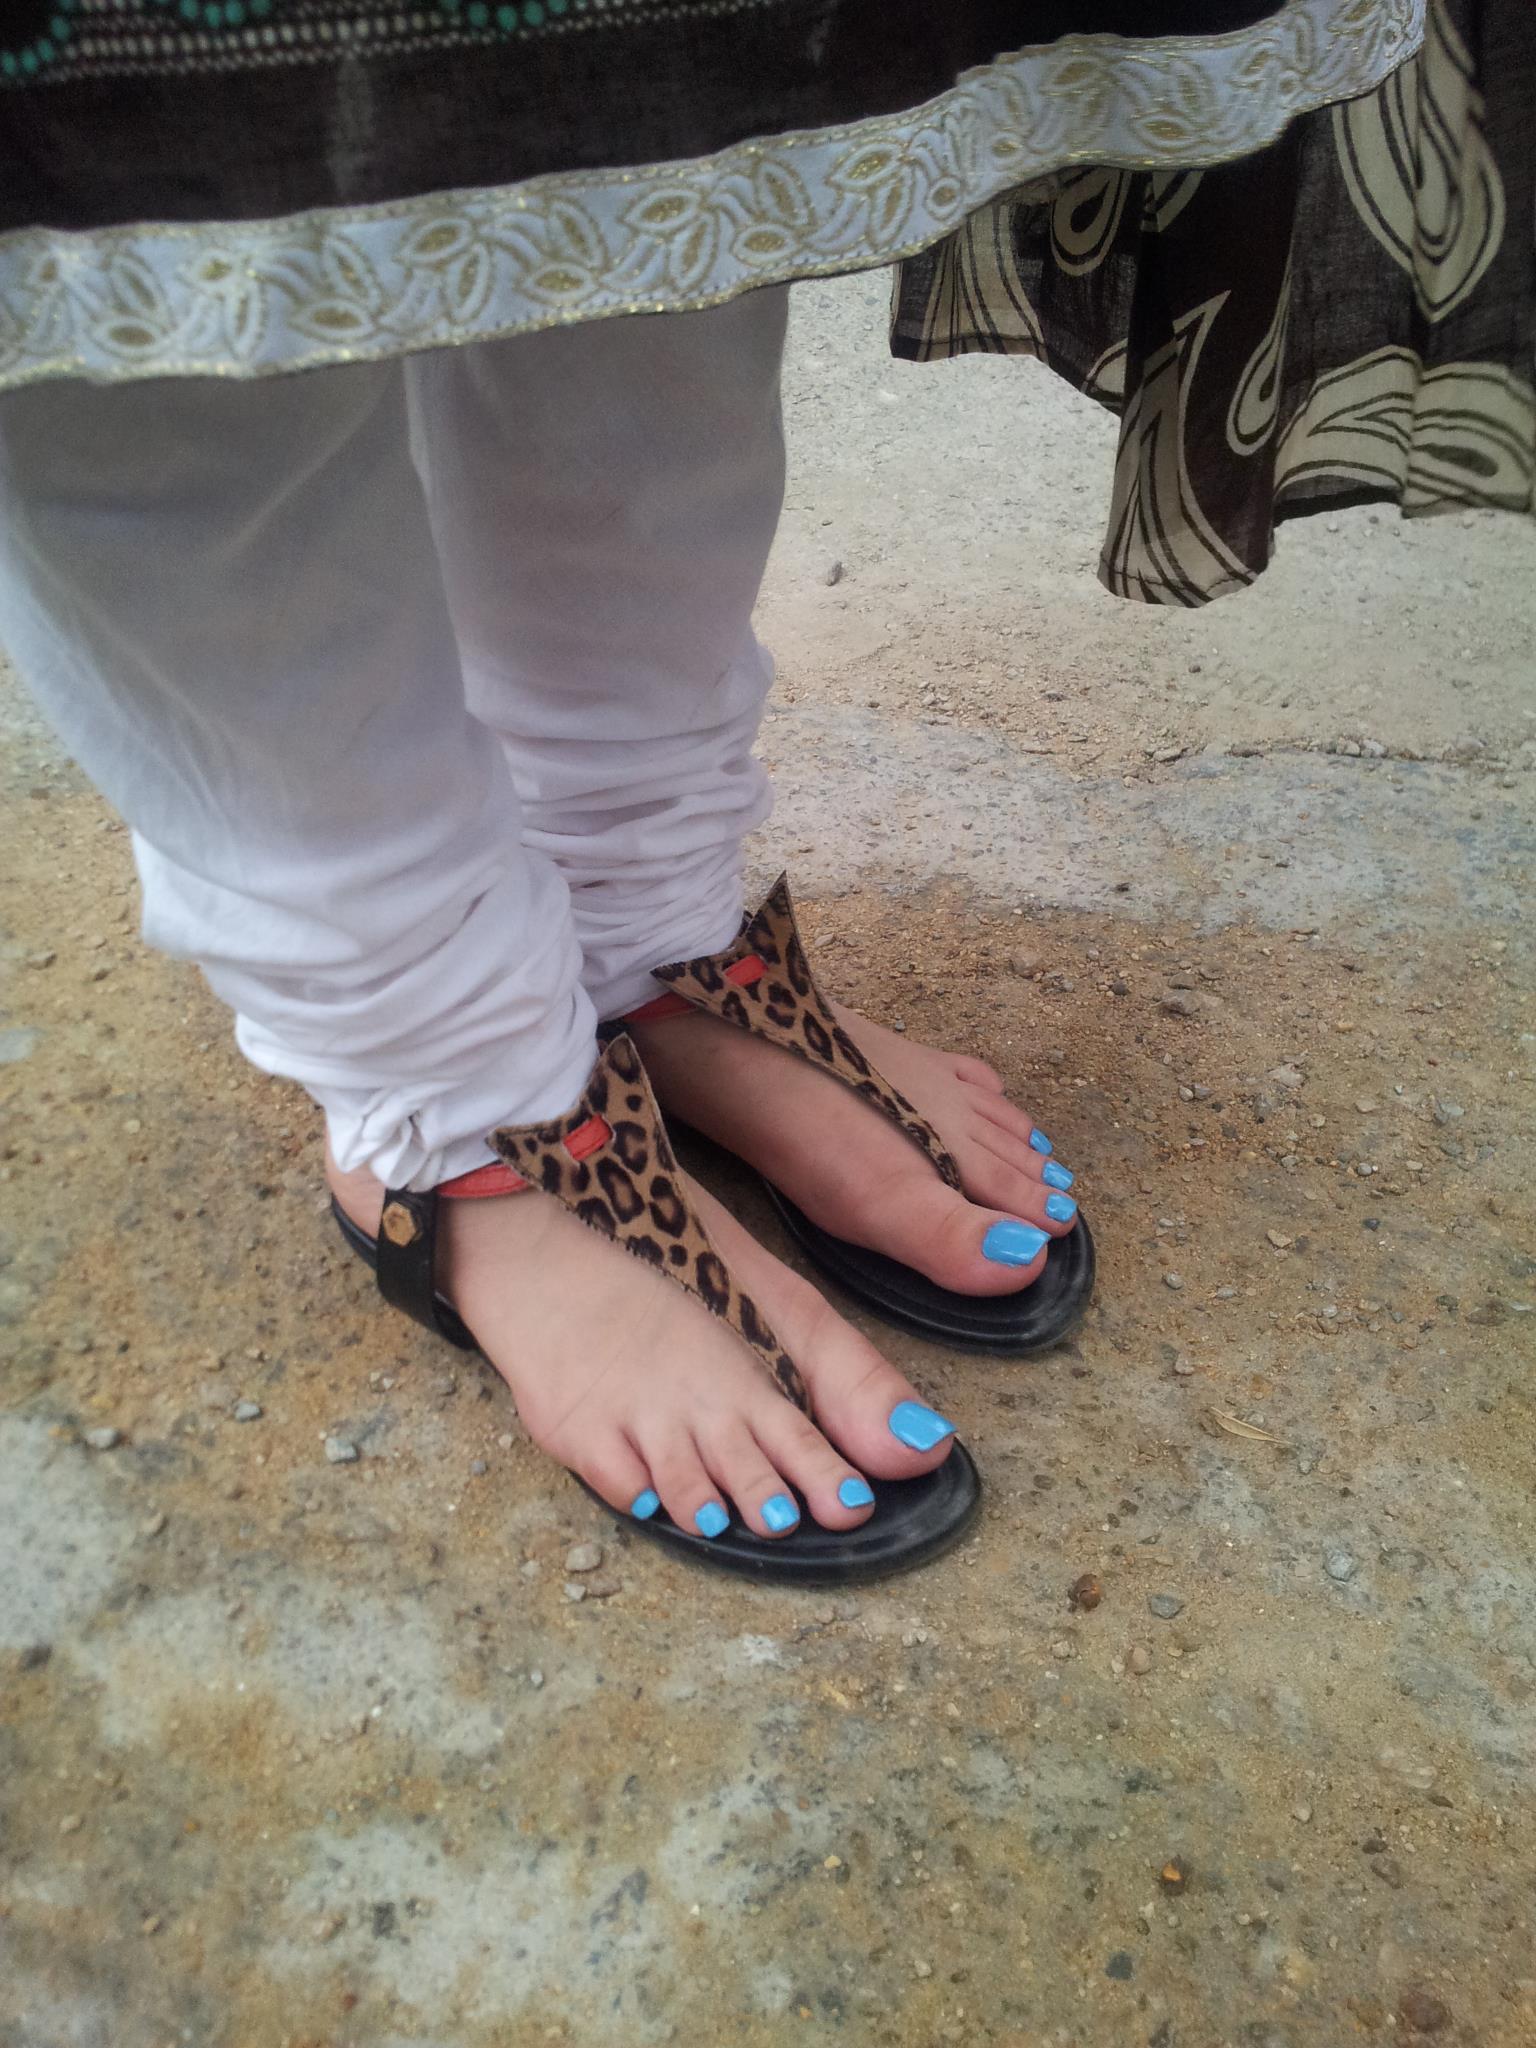 girls sex Indiani foot